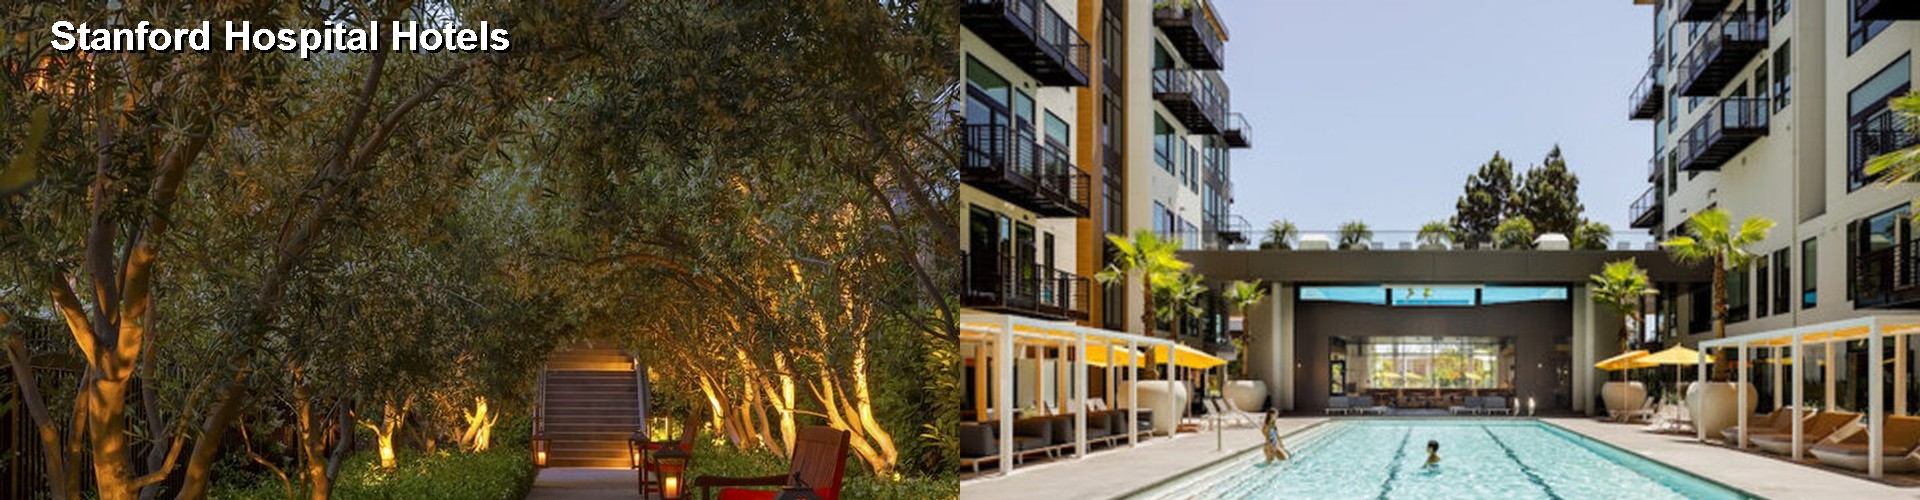 5 Best Hotels near Stanford Hospital